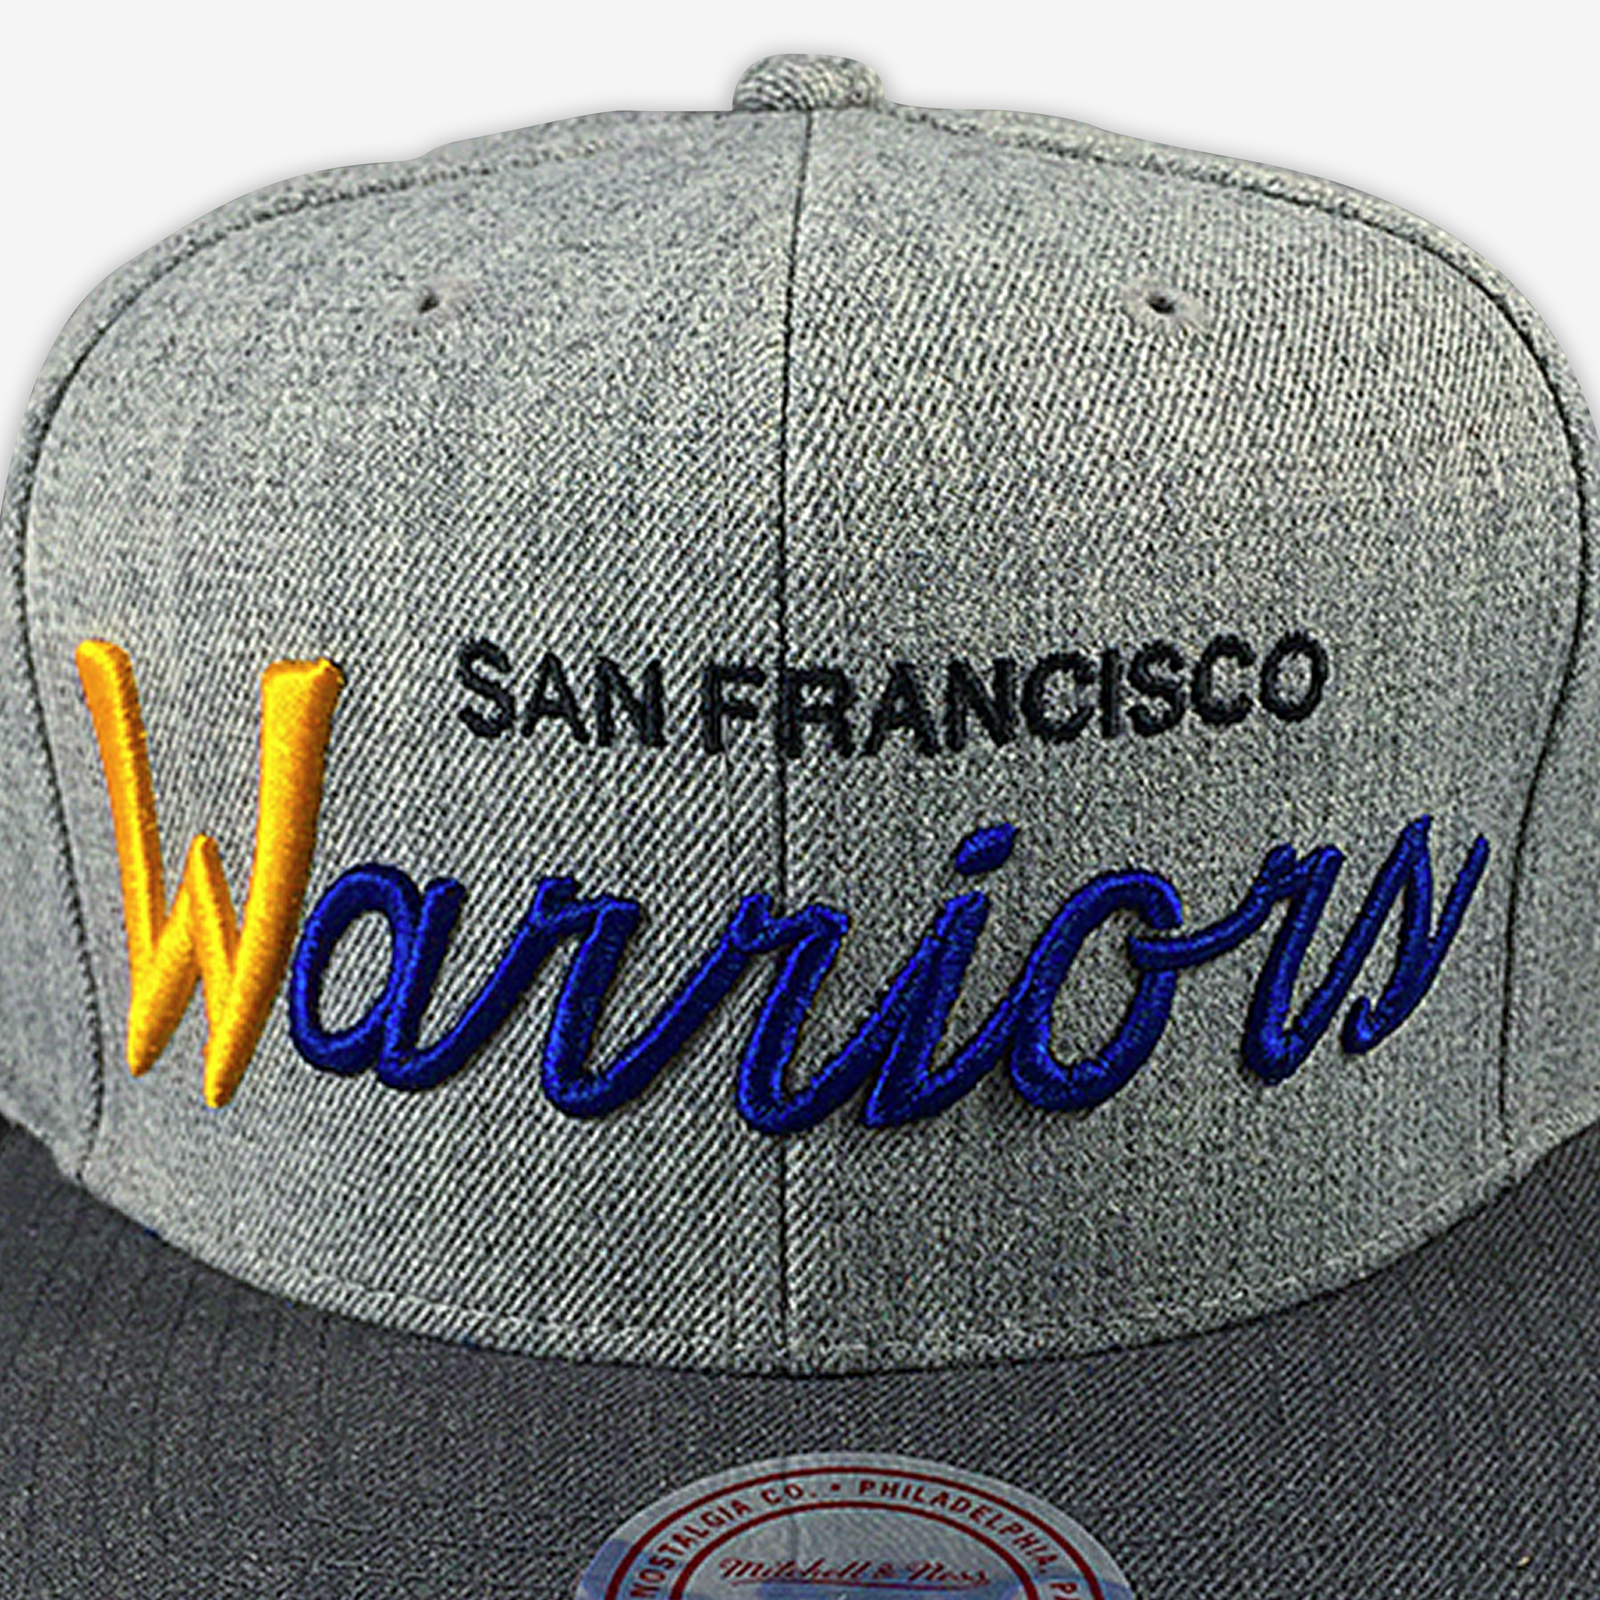 San Francisco Warriors Mitchell & Ness Snapback